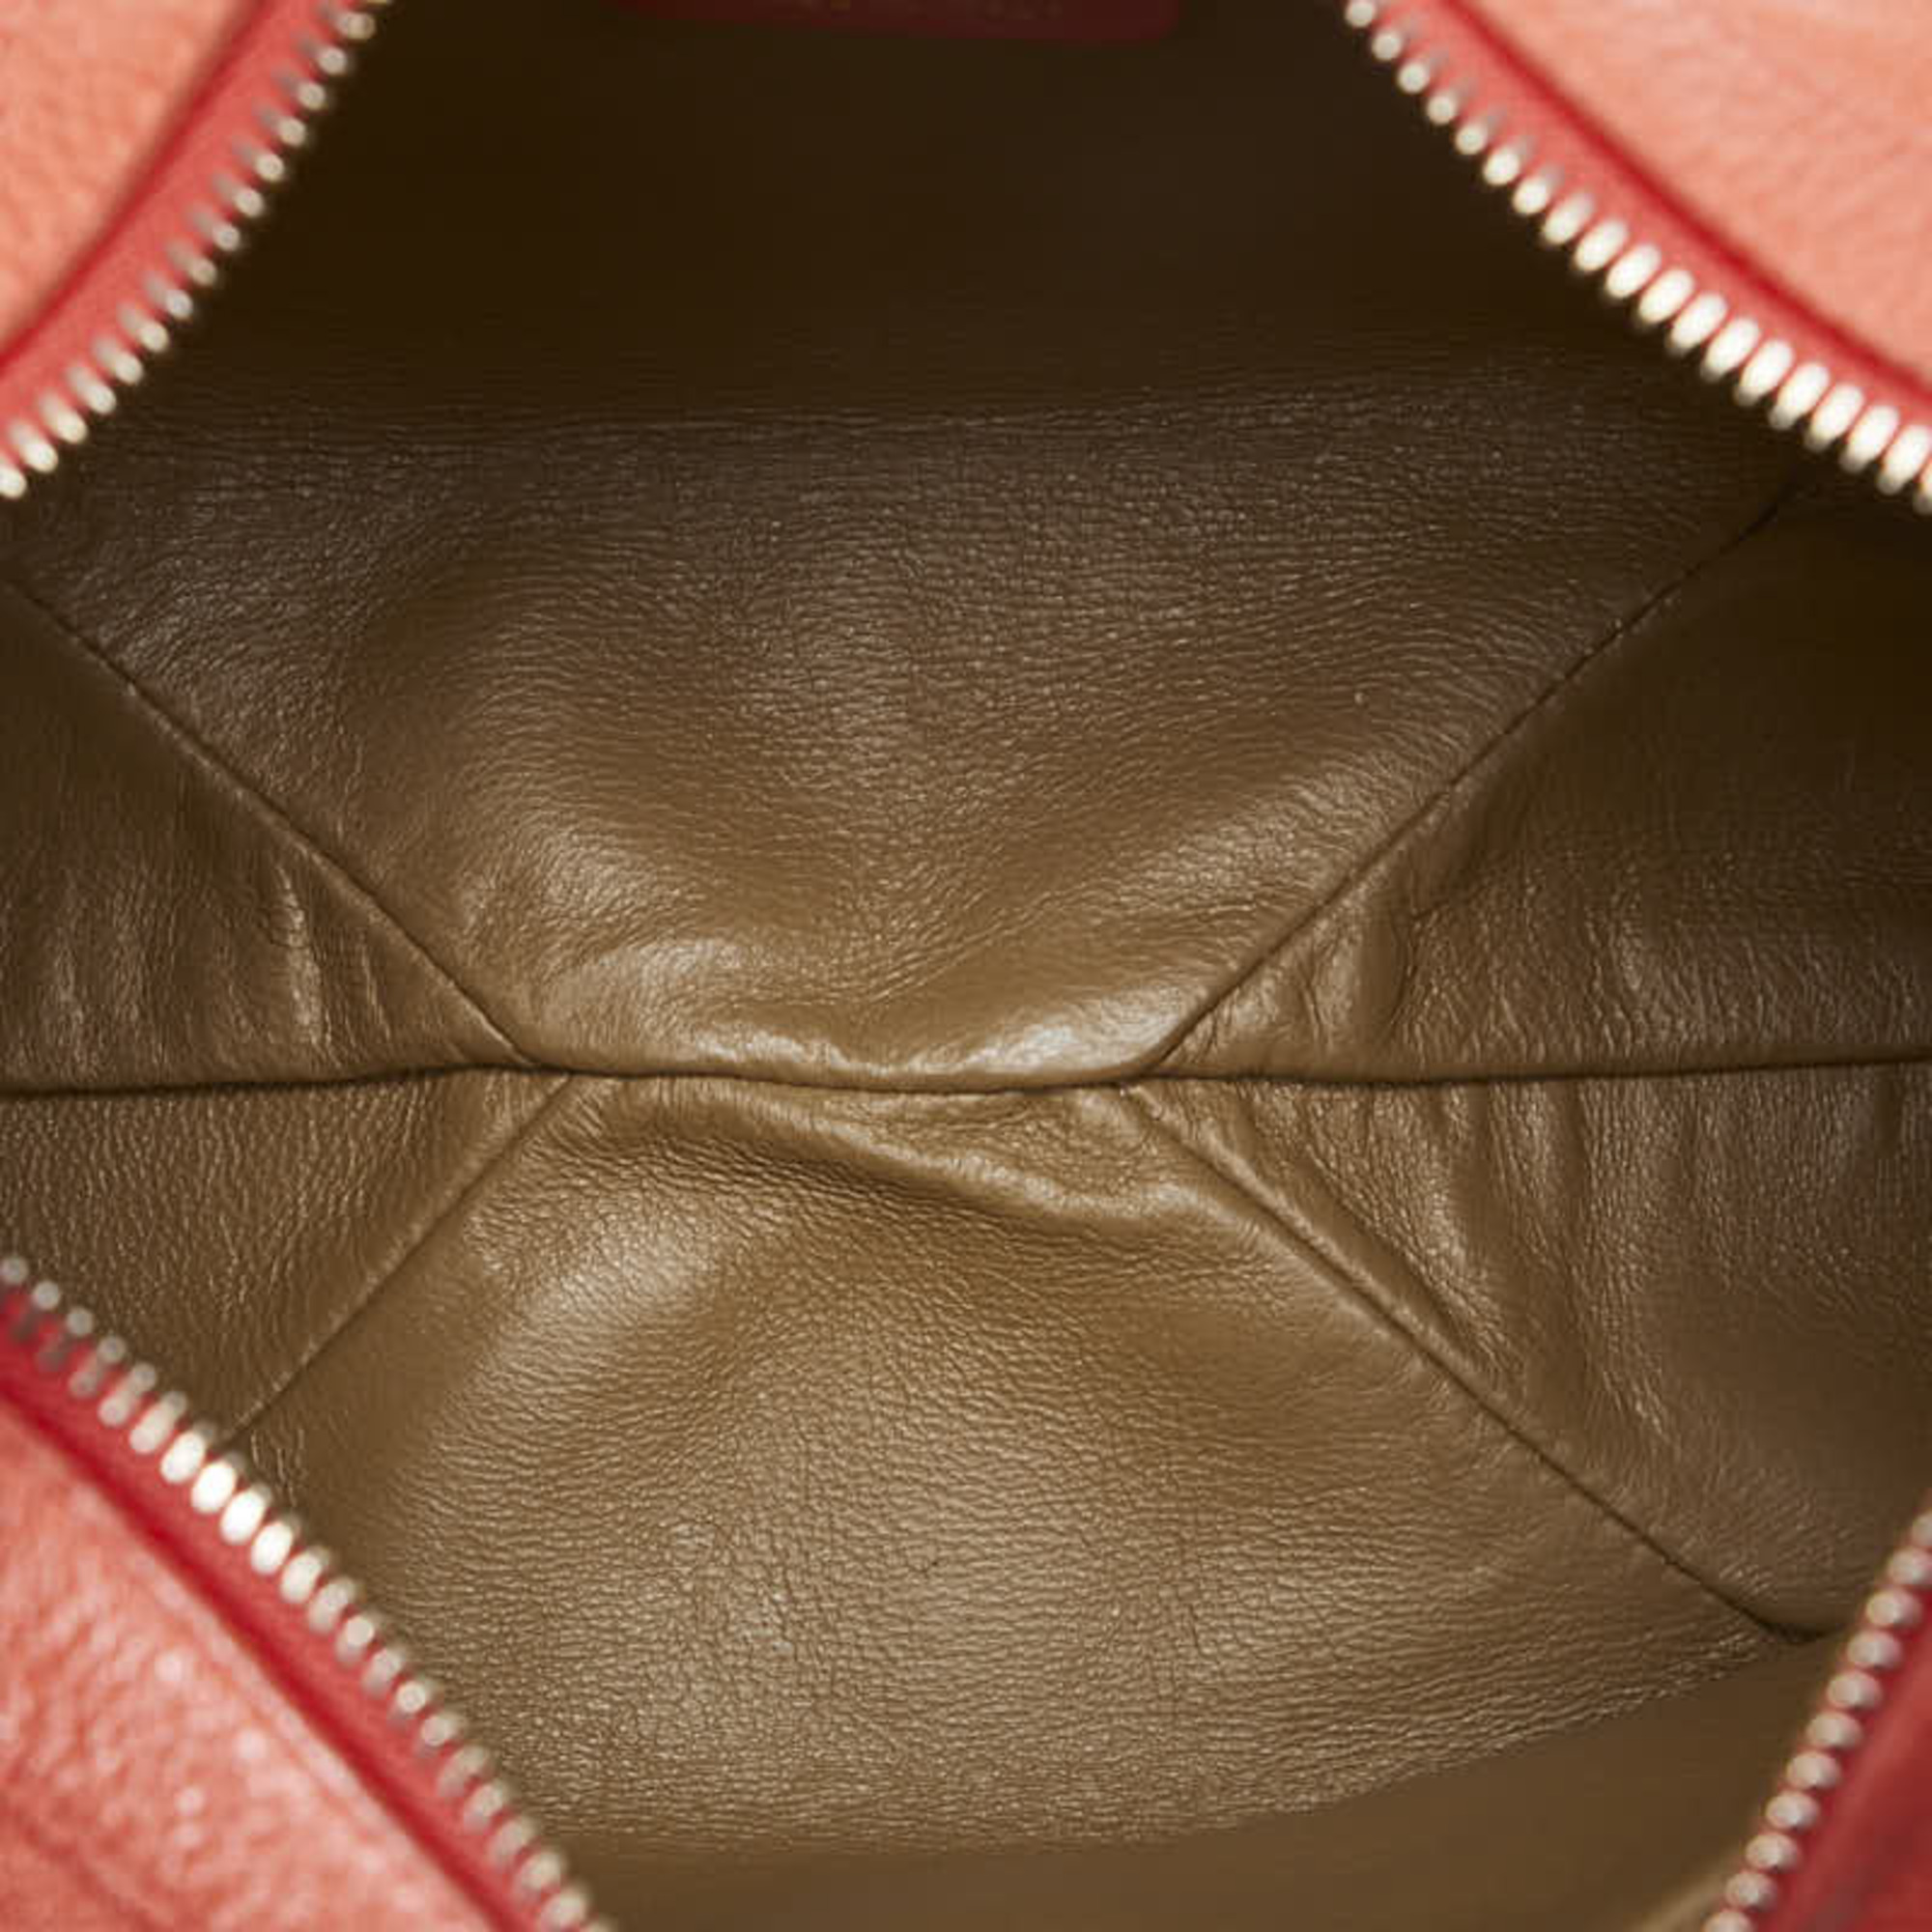 BVLGARI One Shoulder Bag Pink Leather Ladies